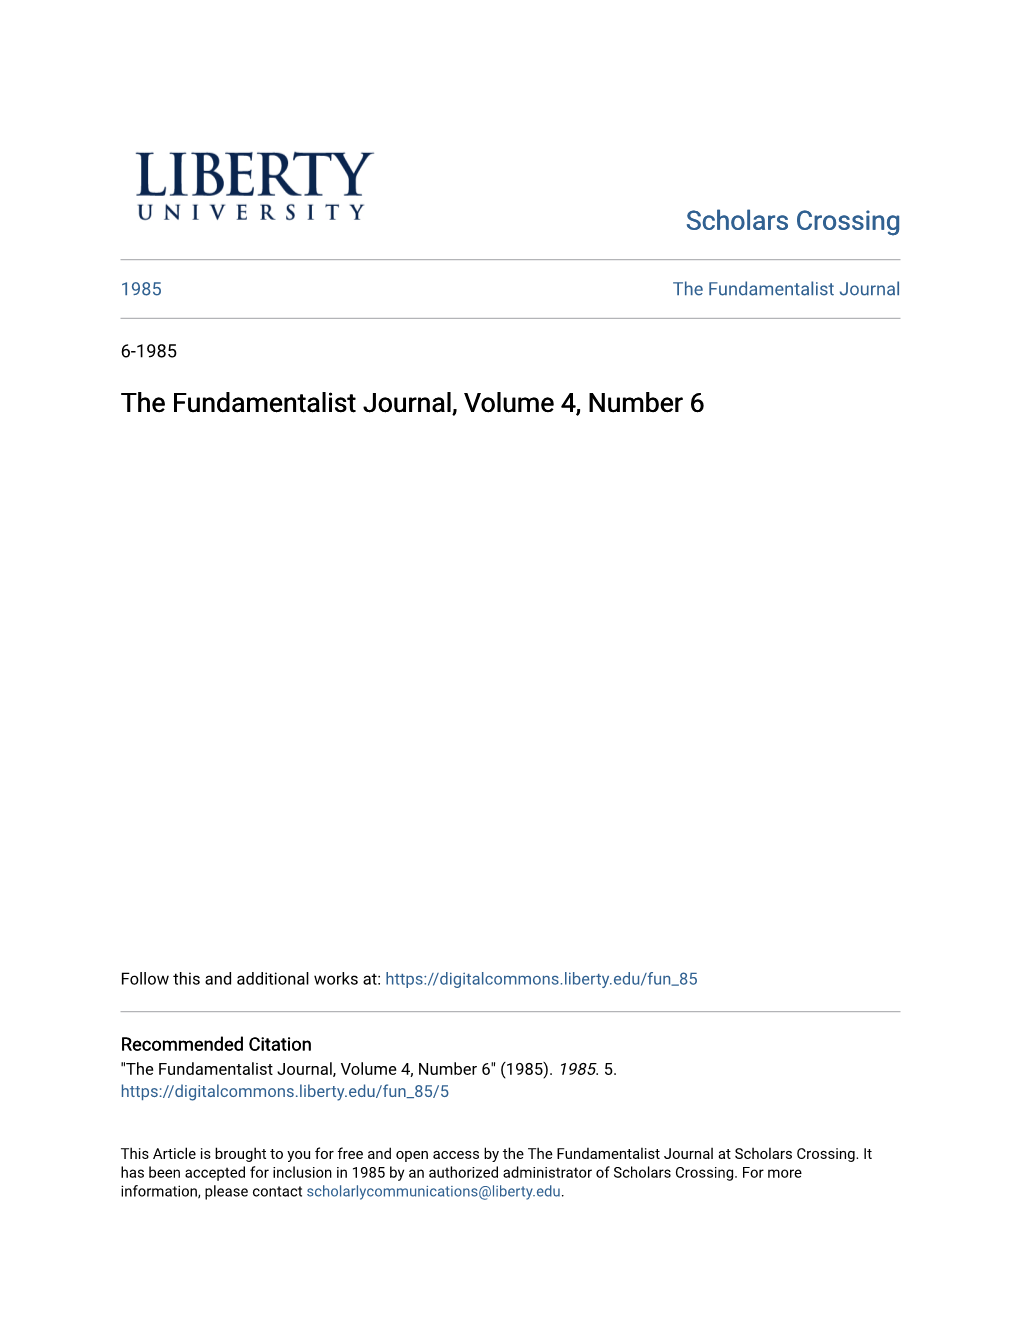 The Fundamentalist Journal, Volume 4, Number 6